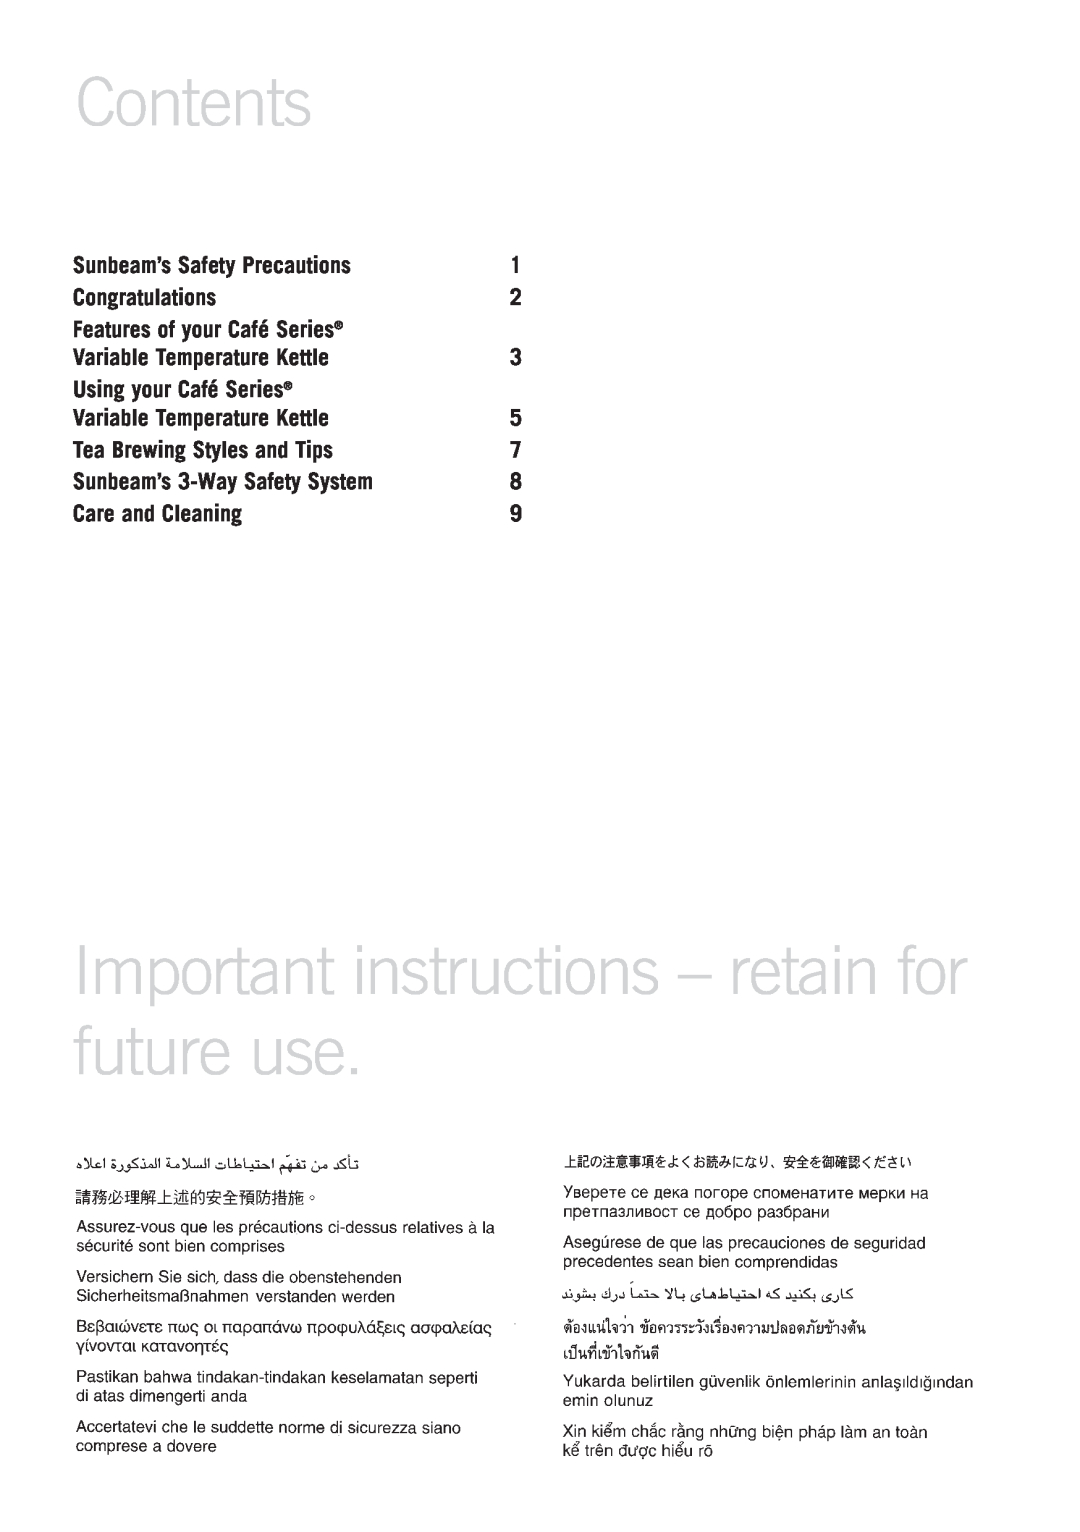 Sunbeam KE9600 Contents, Important instructions - retain for future use, Sunbeam’s Safety Precautions, Congratulations 